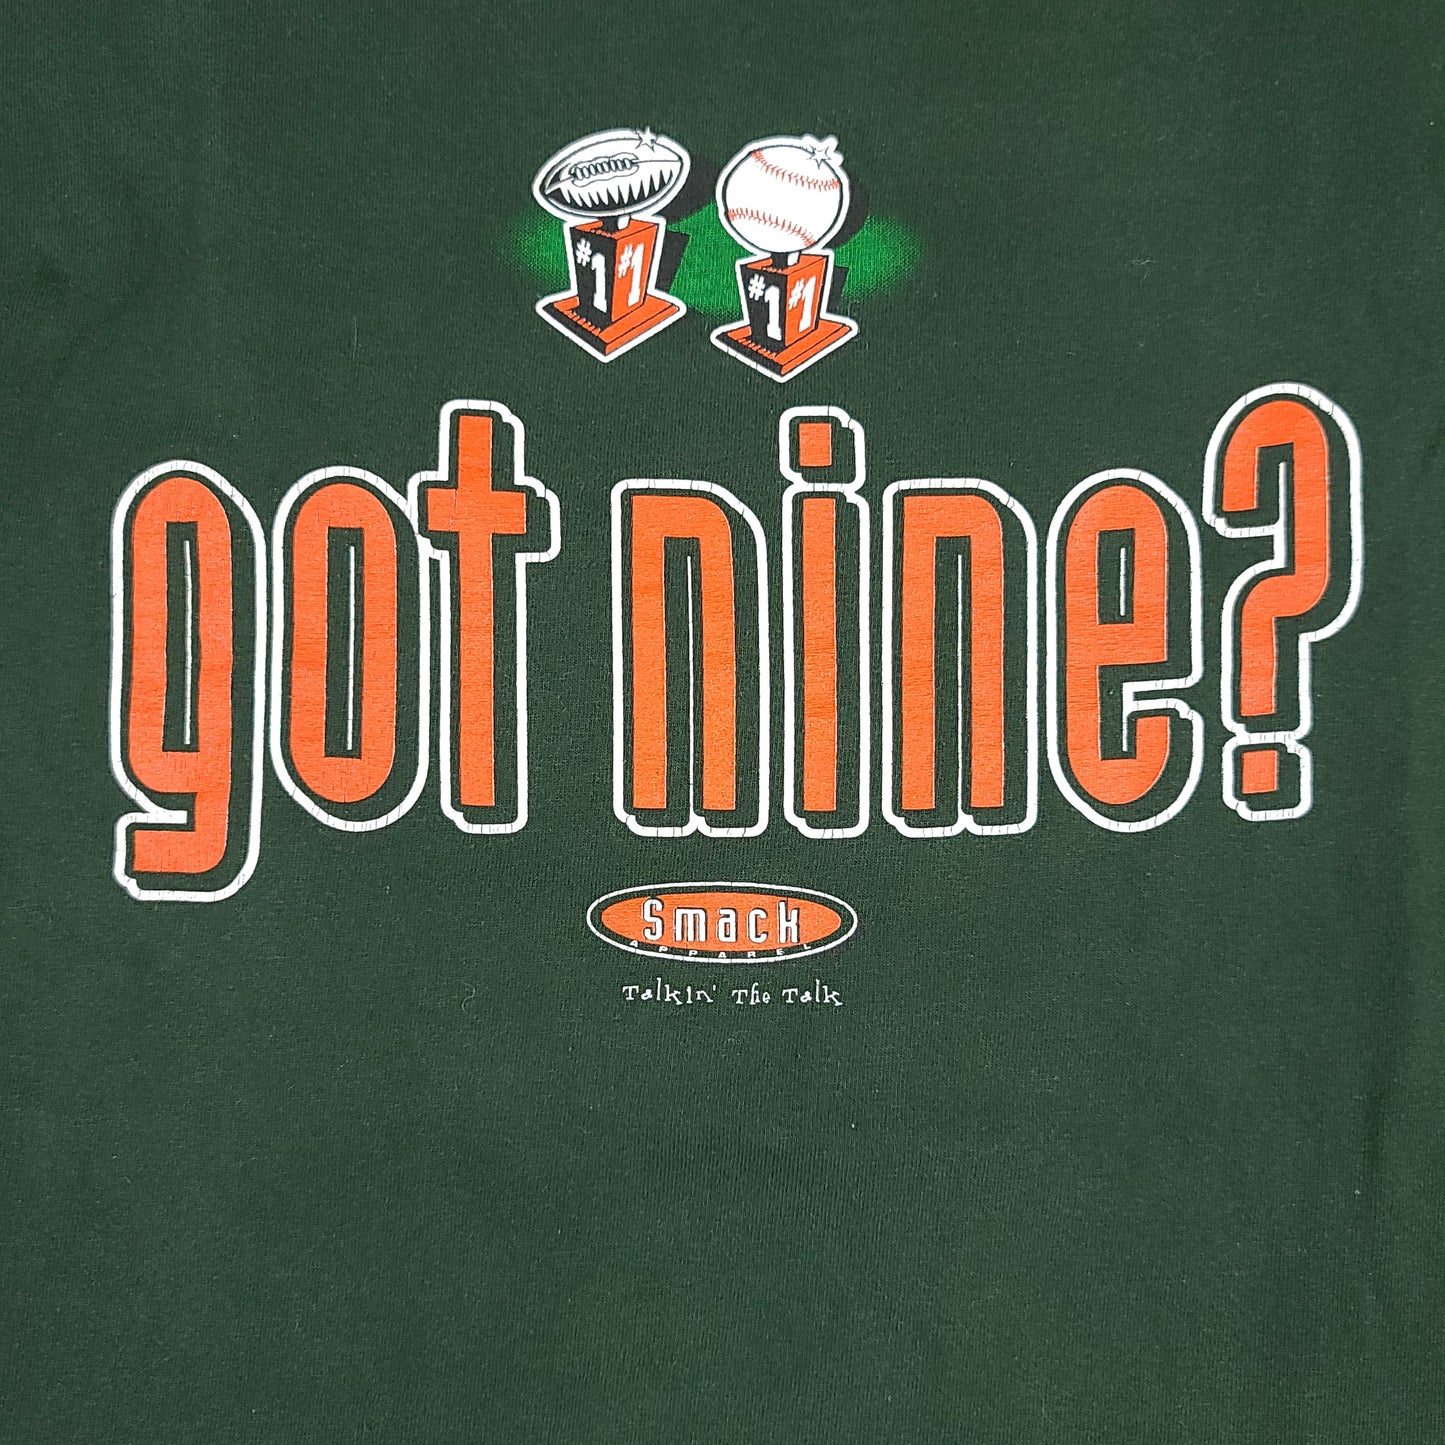 Vintage University of Miami Hurricanes "Got Nine?" Green Tee